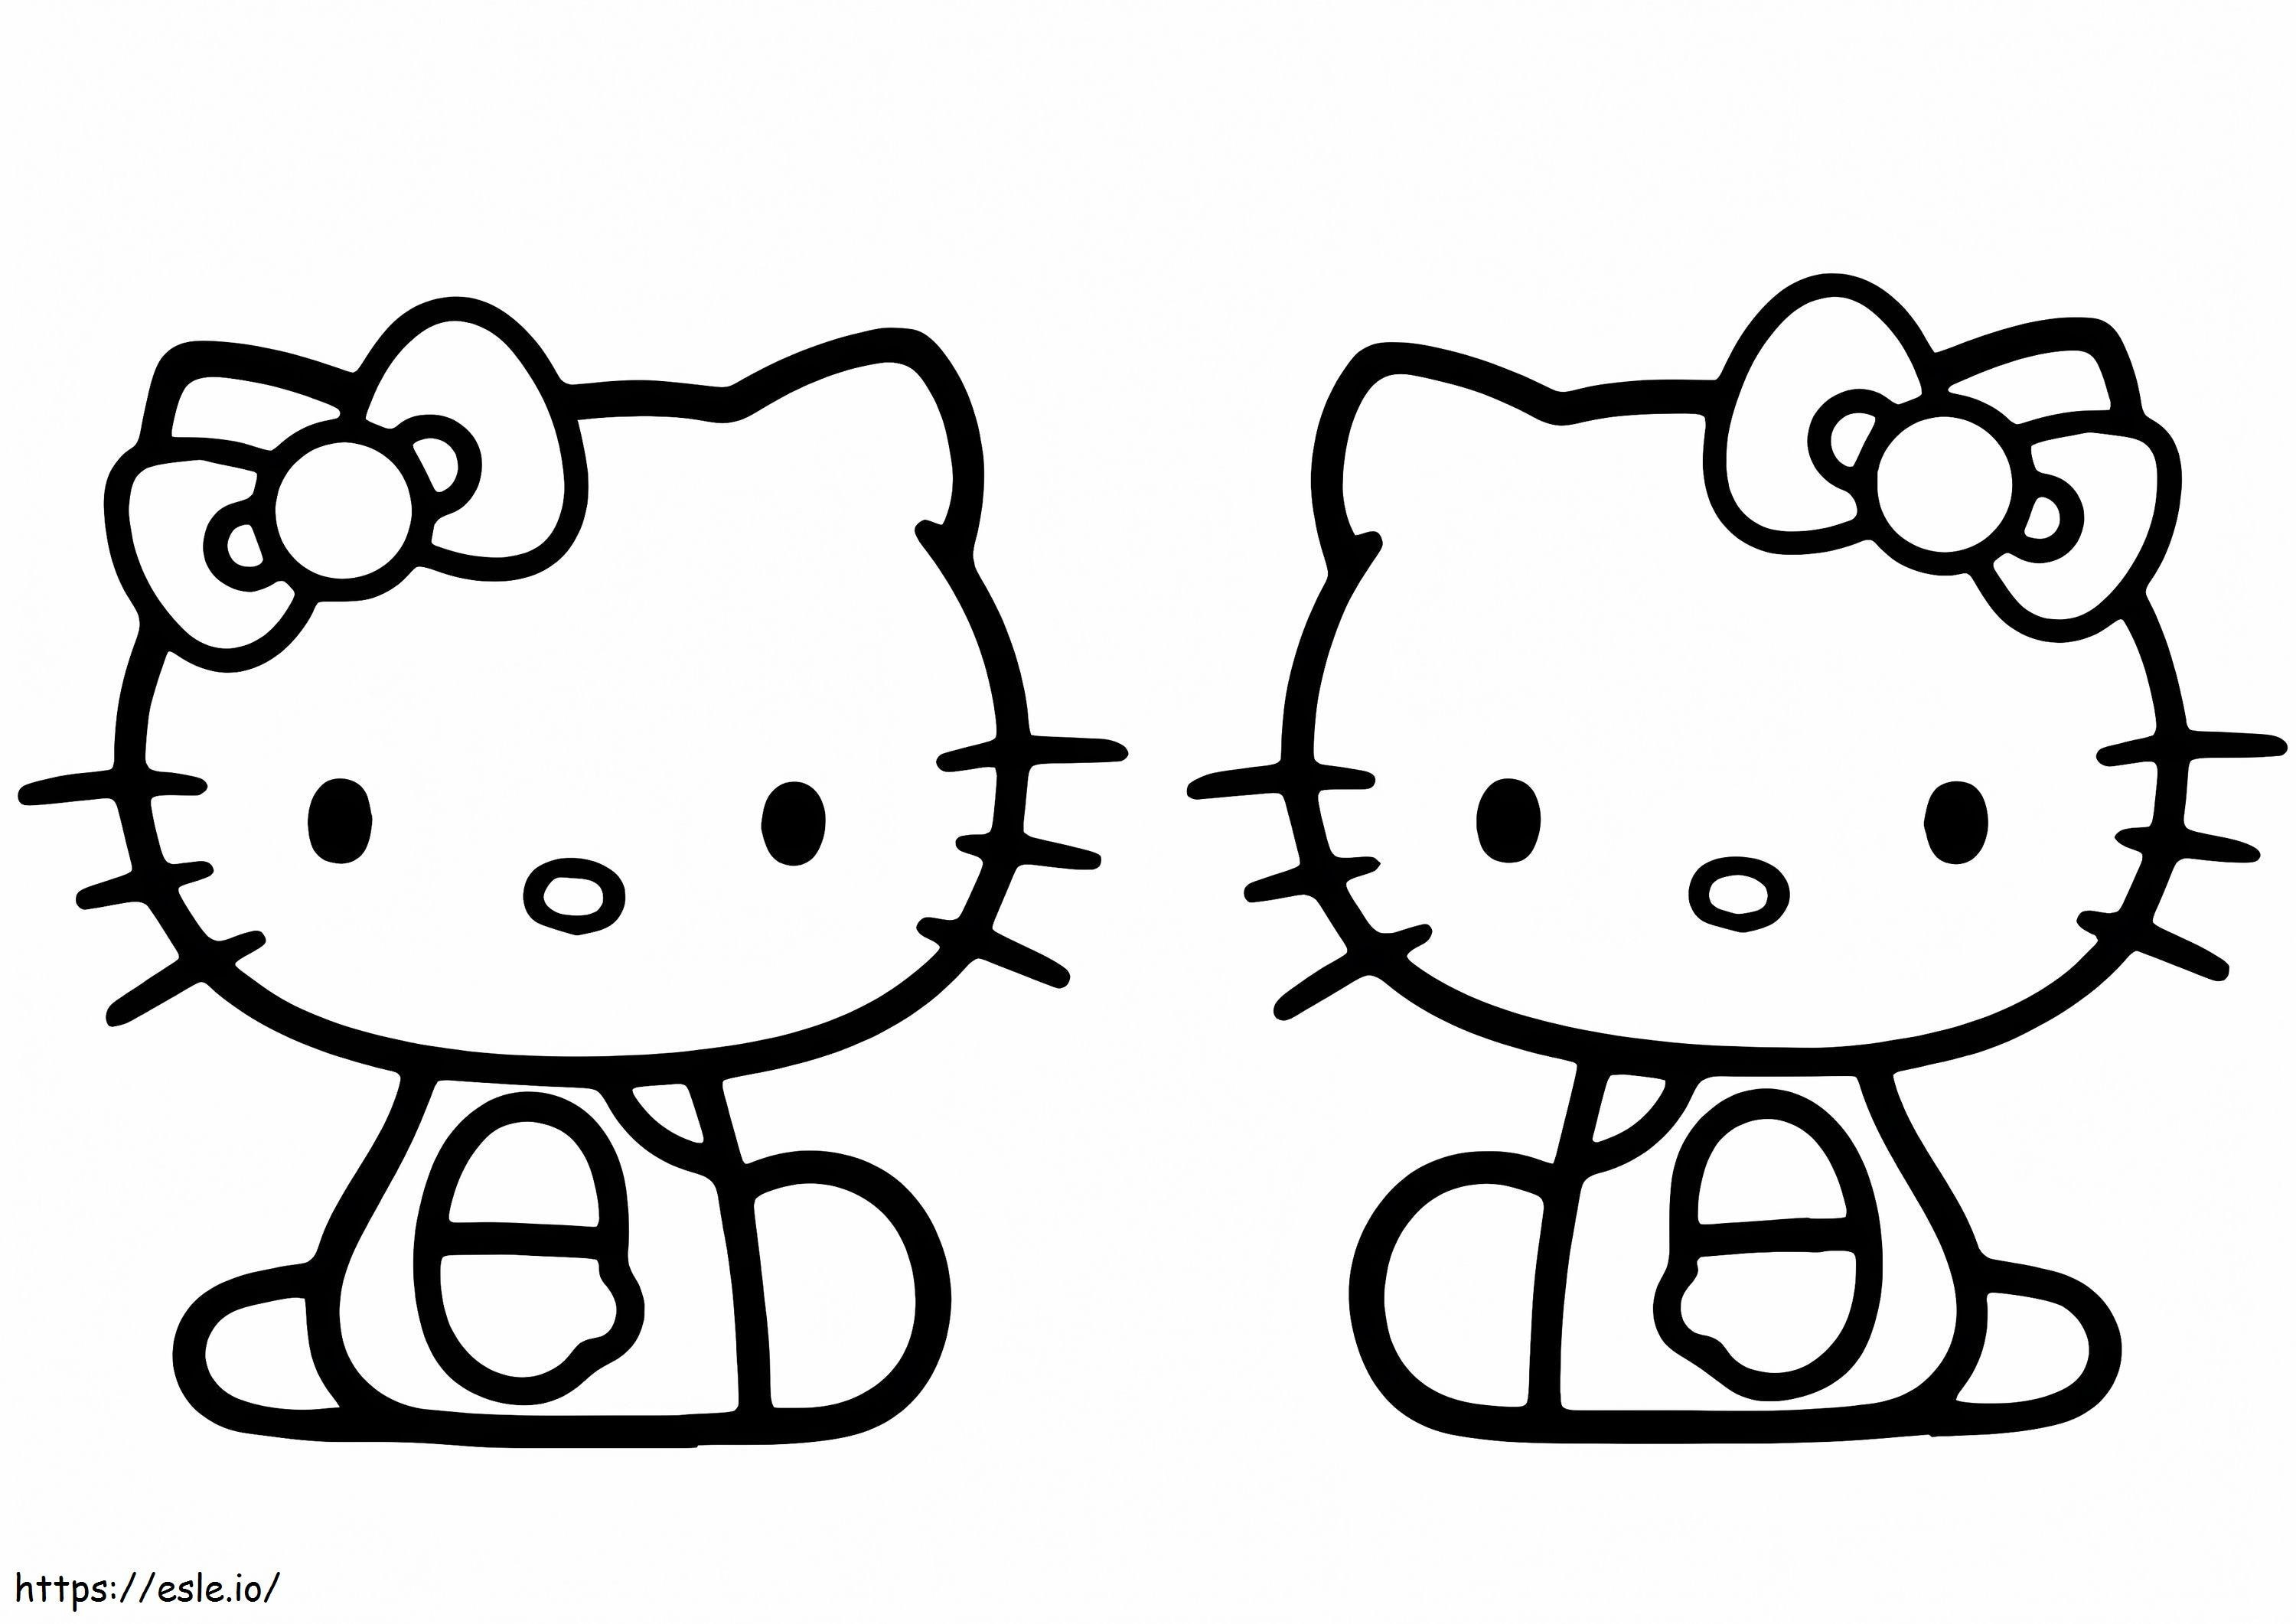 Mimmy ve Hello Kitty boyama